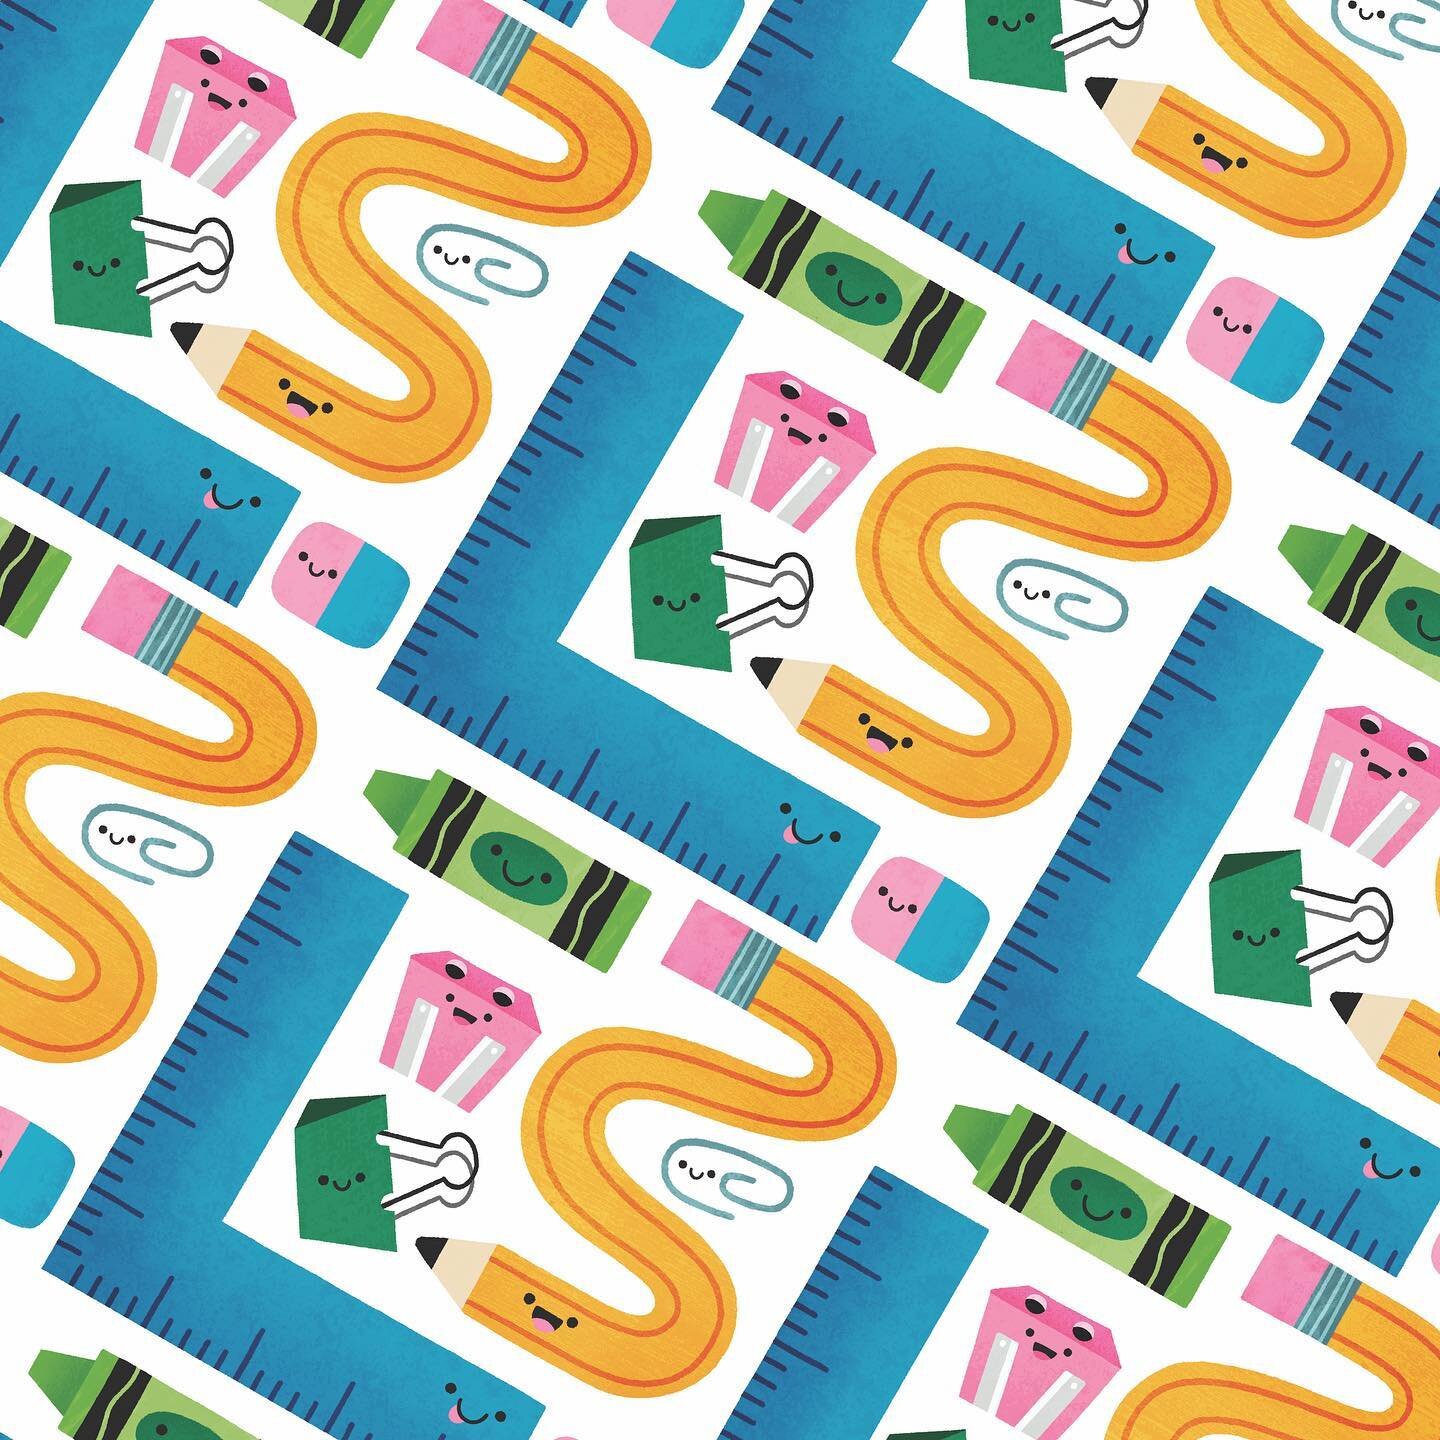 A cute stationary pattern ✏️
.
.
.
.
.
.
.
.
.
.
.
.
#pattern #patterndesign #patternlove #patterndesigner #stationery #cutepattern #cutepatterndesign #ohhdeersubmissions #crayons #pencil #paperclip #sharpener #ruler #seekingrepresentation #illustrat